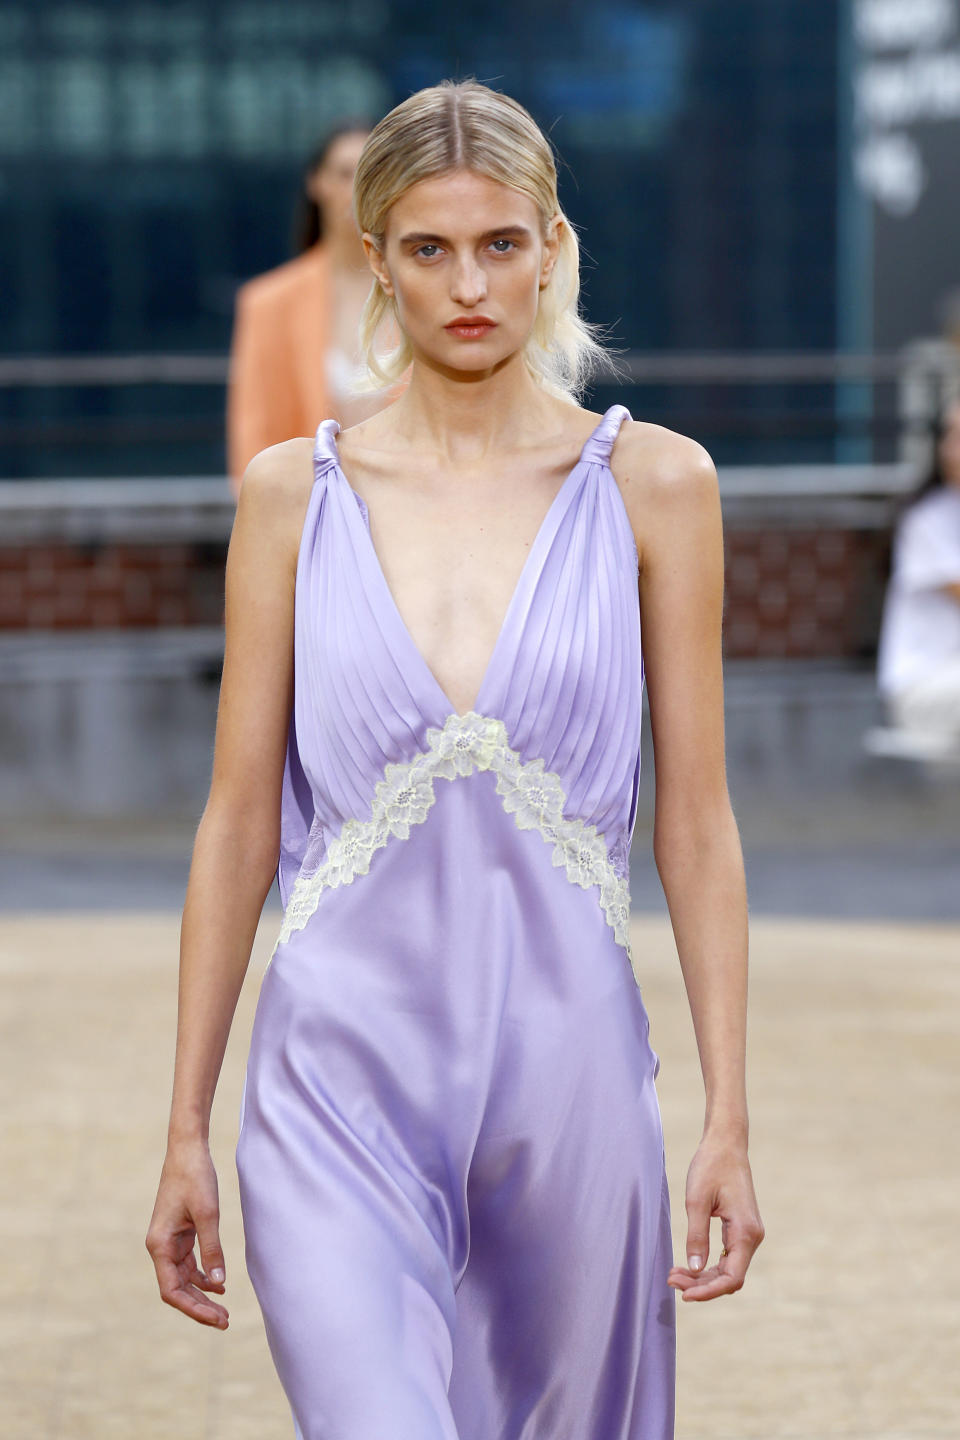 A model walks the runway for Jonathan Simkhai during New York Fashion Week on Sept. 9.&nbsp;&nbsp;